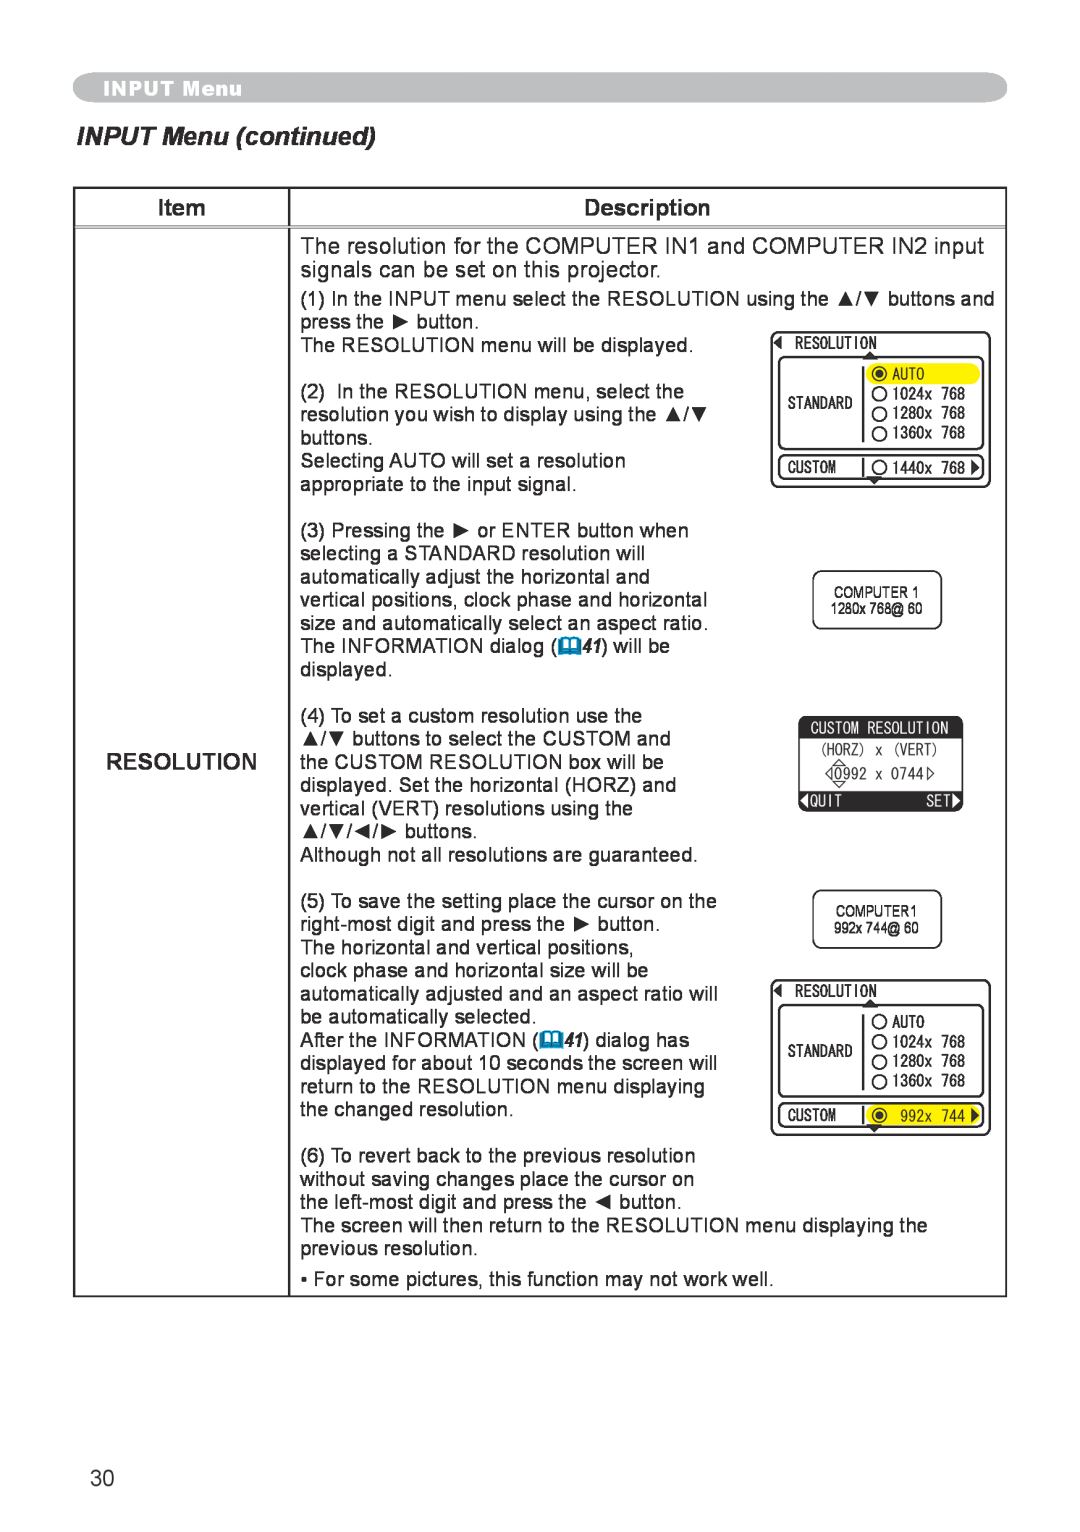 3M X20 manual INPUT Menu continued, Description, Resolution, The RESOLUTION menu will be displayed 